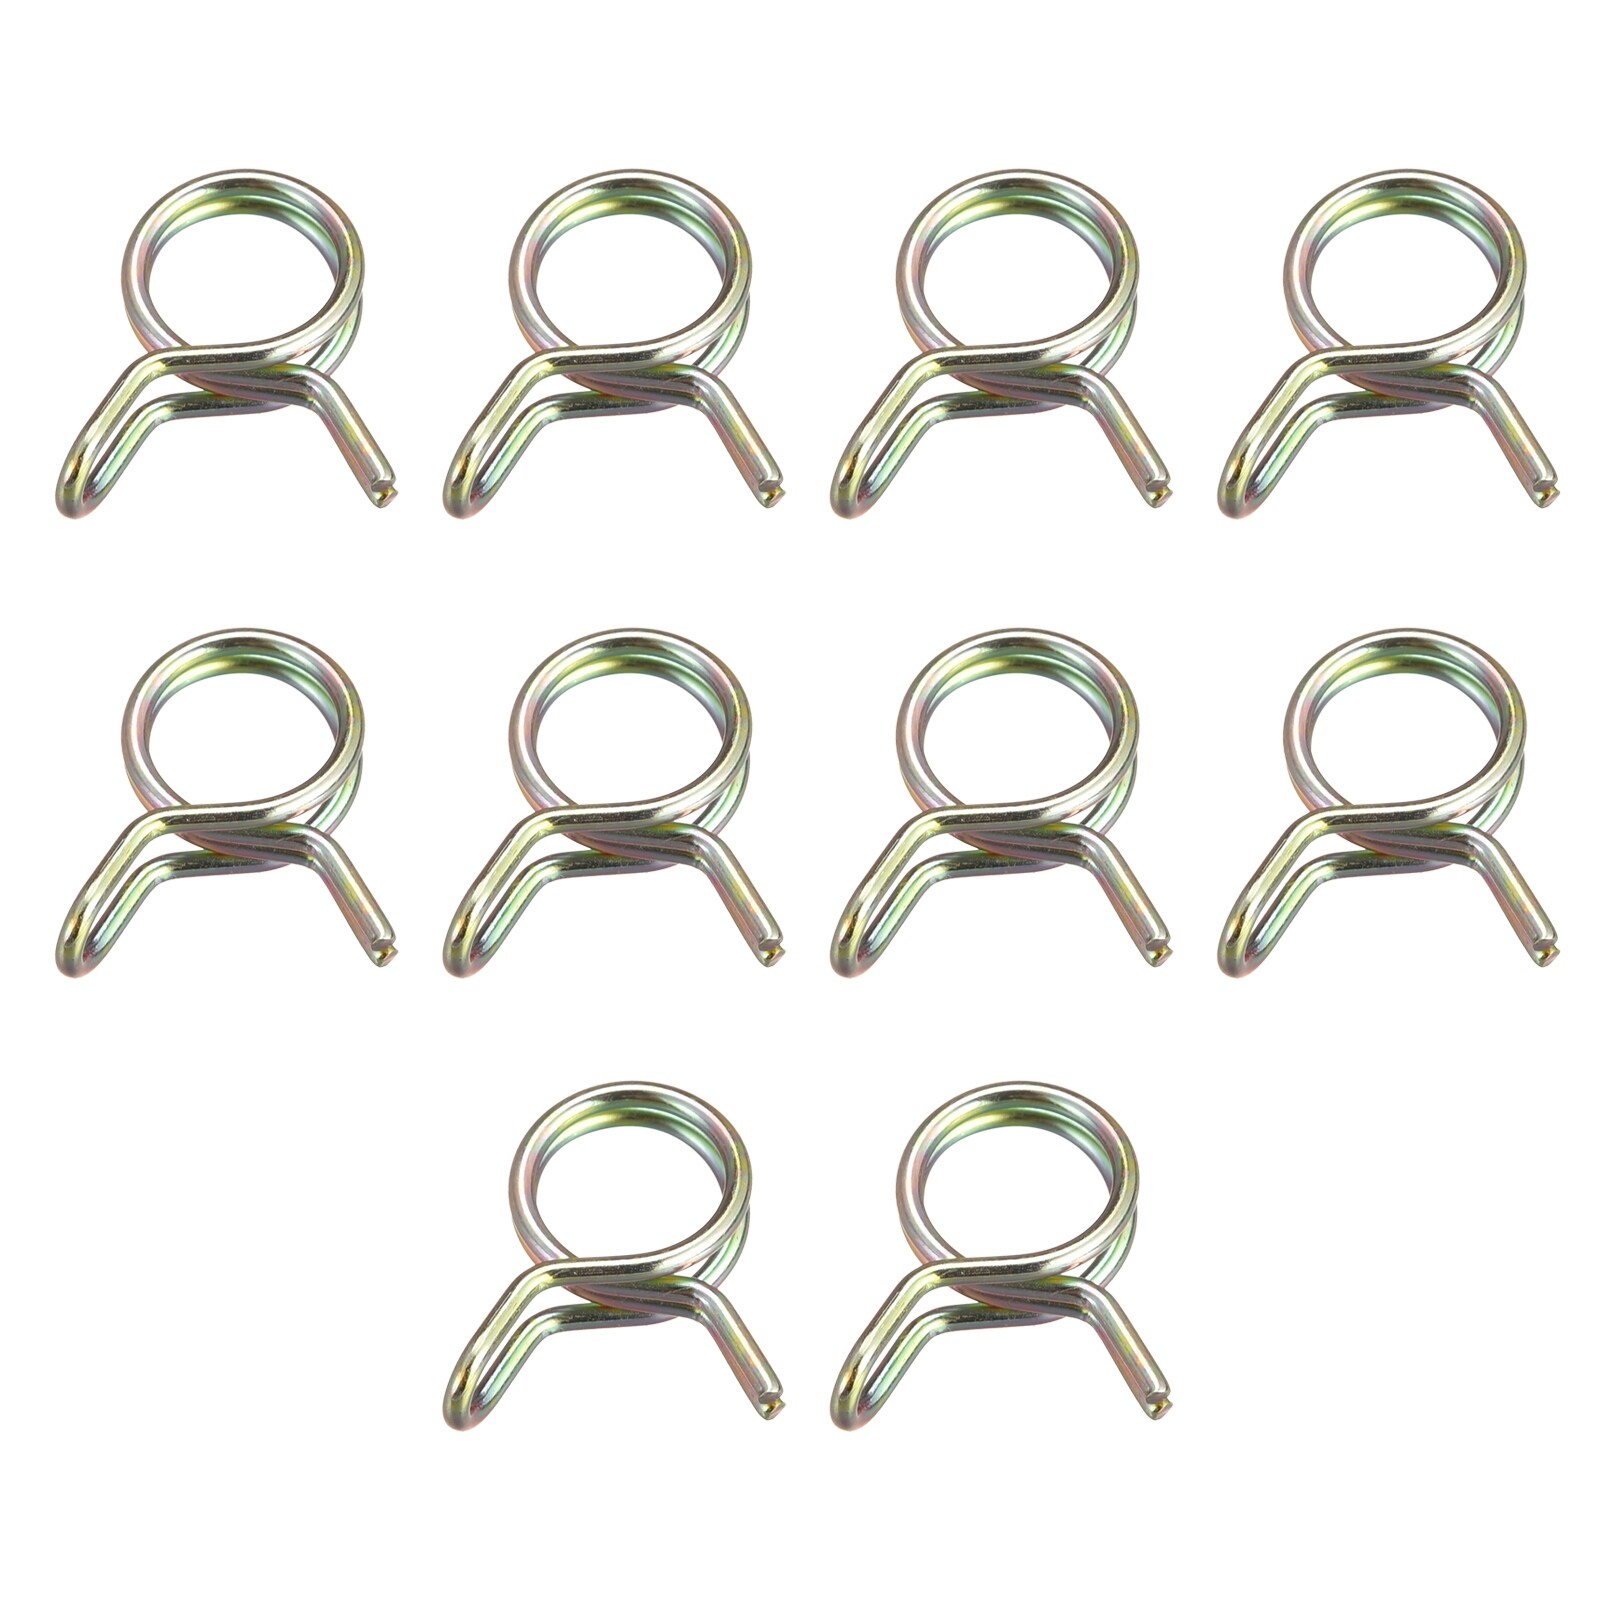 Double Wire Spring Hose Clamp, 10pcs 65Mn Steel 7mm Clips, Color Zinc Plated - Color Zinc